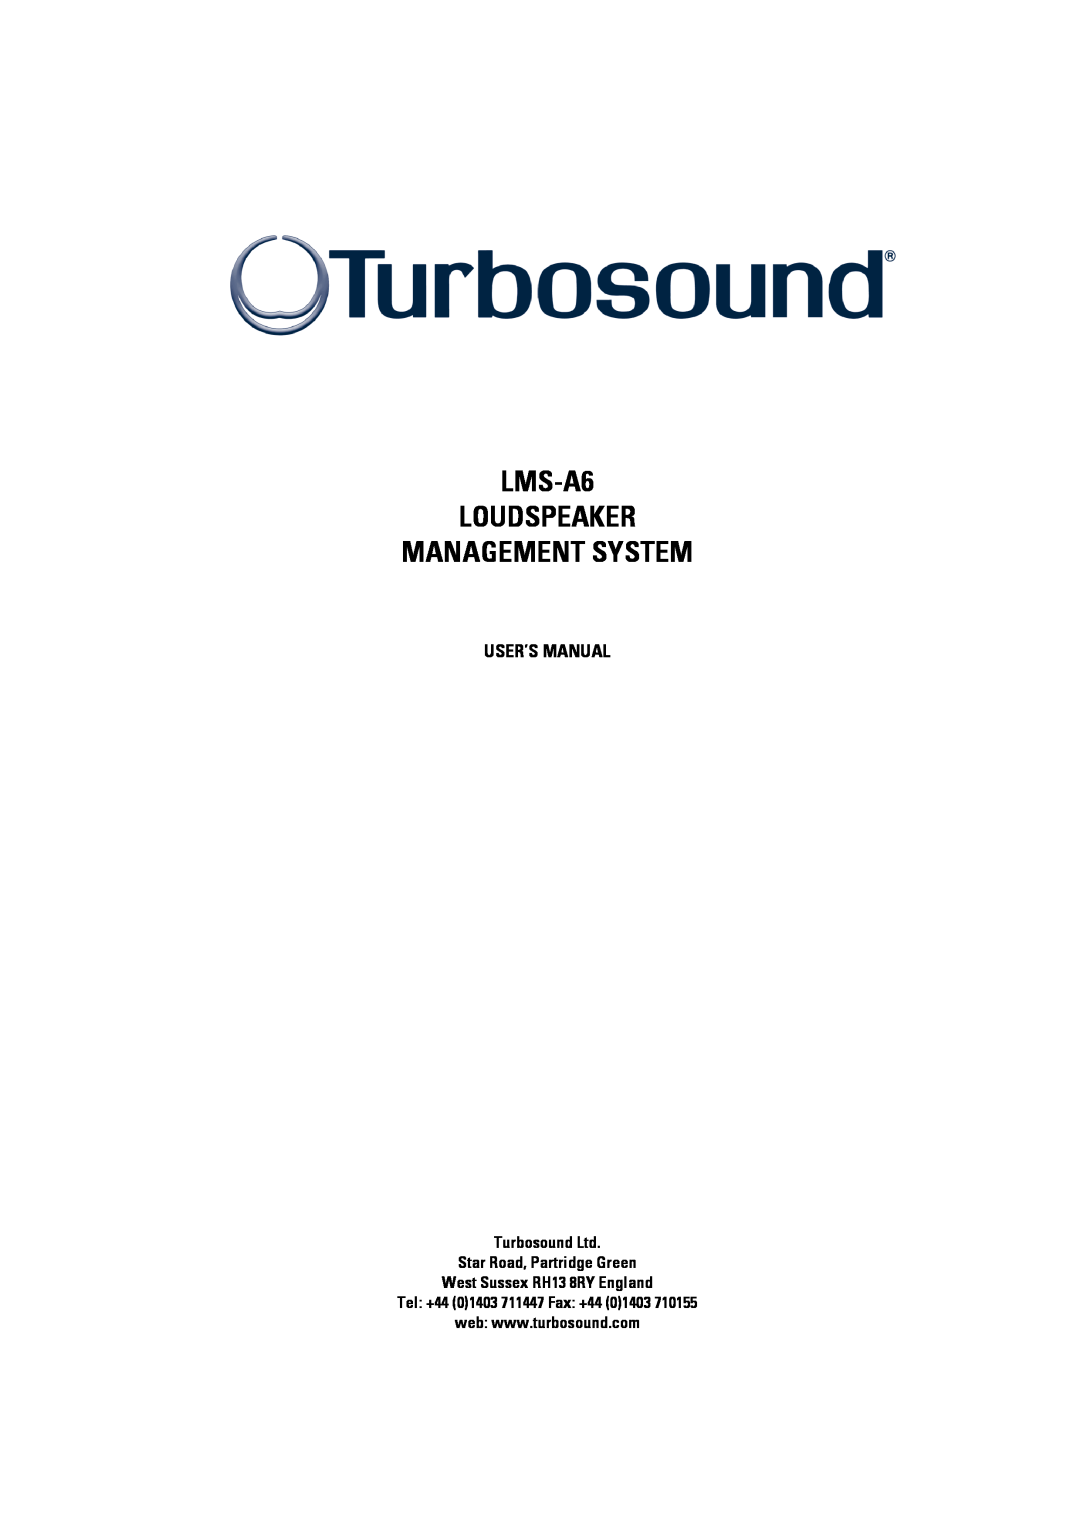 Turbosound LMS-A6 user manual West Sussex RH13 8RY England, Tel +44 01403 711447 Fax +44 